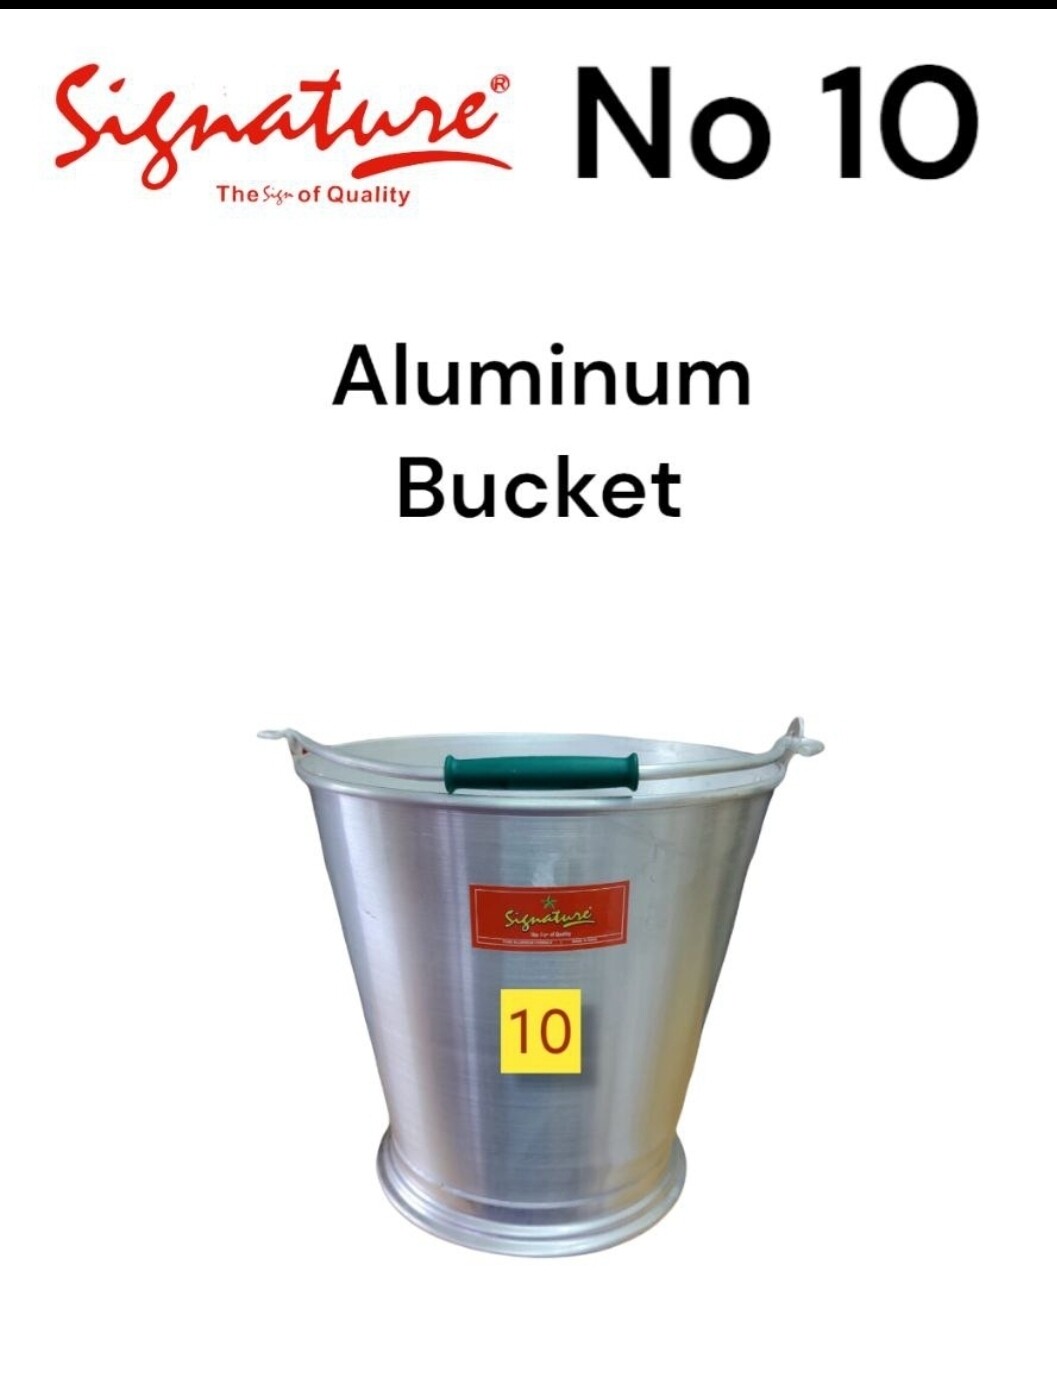 Siignature aluminium bucket no.10